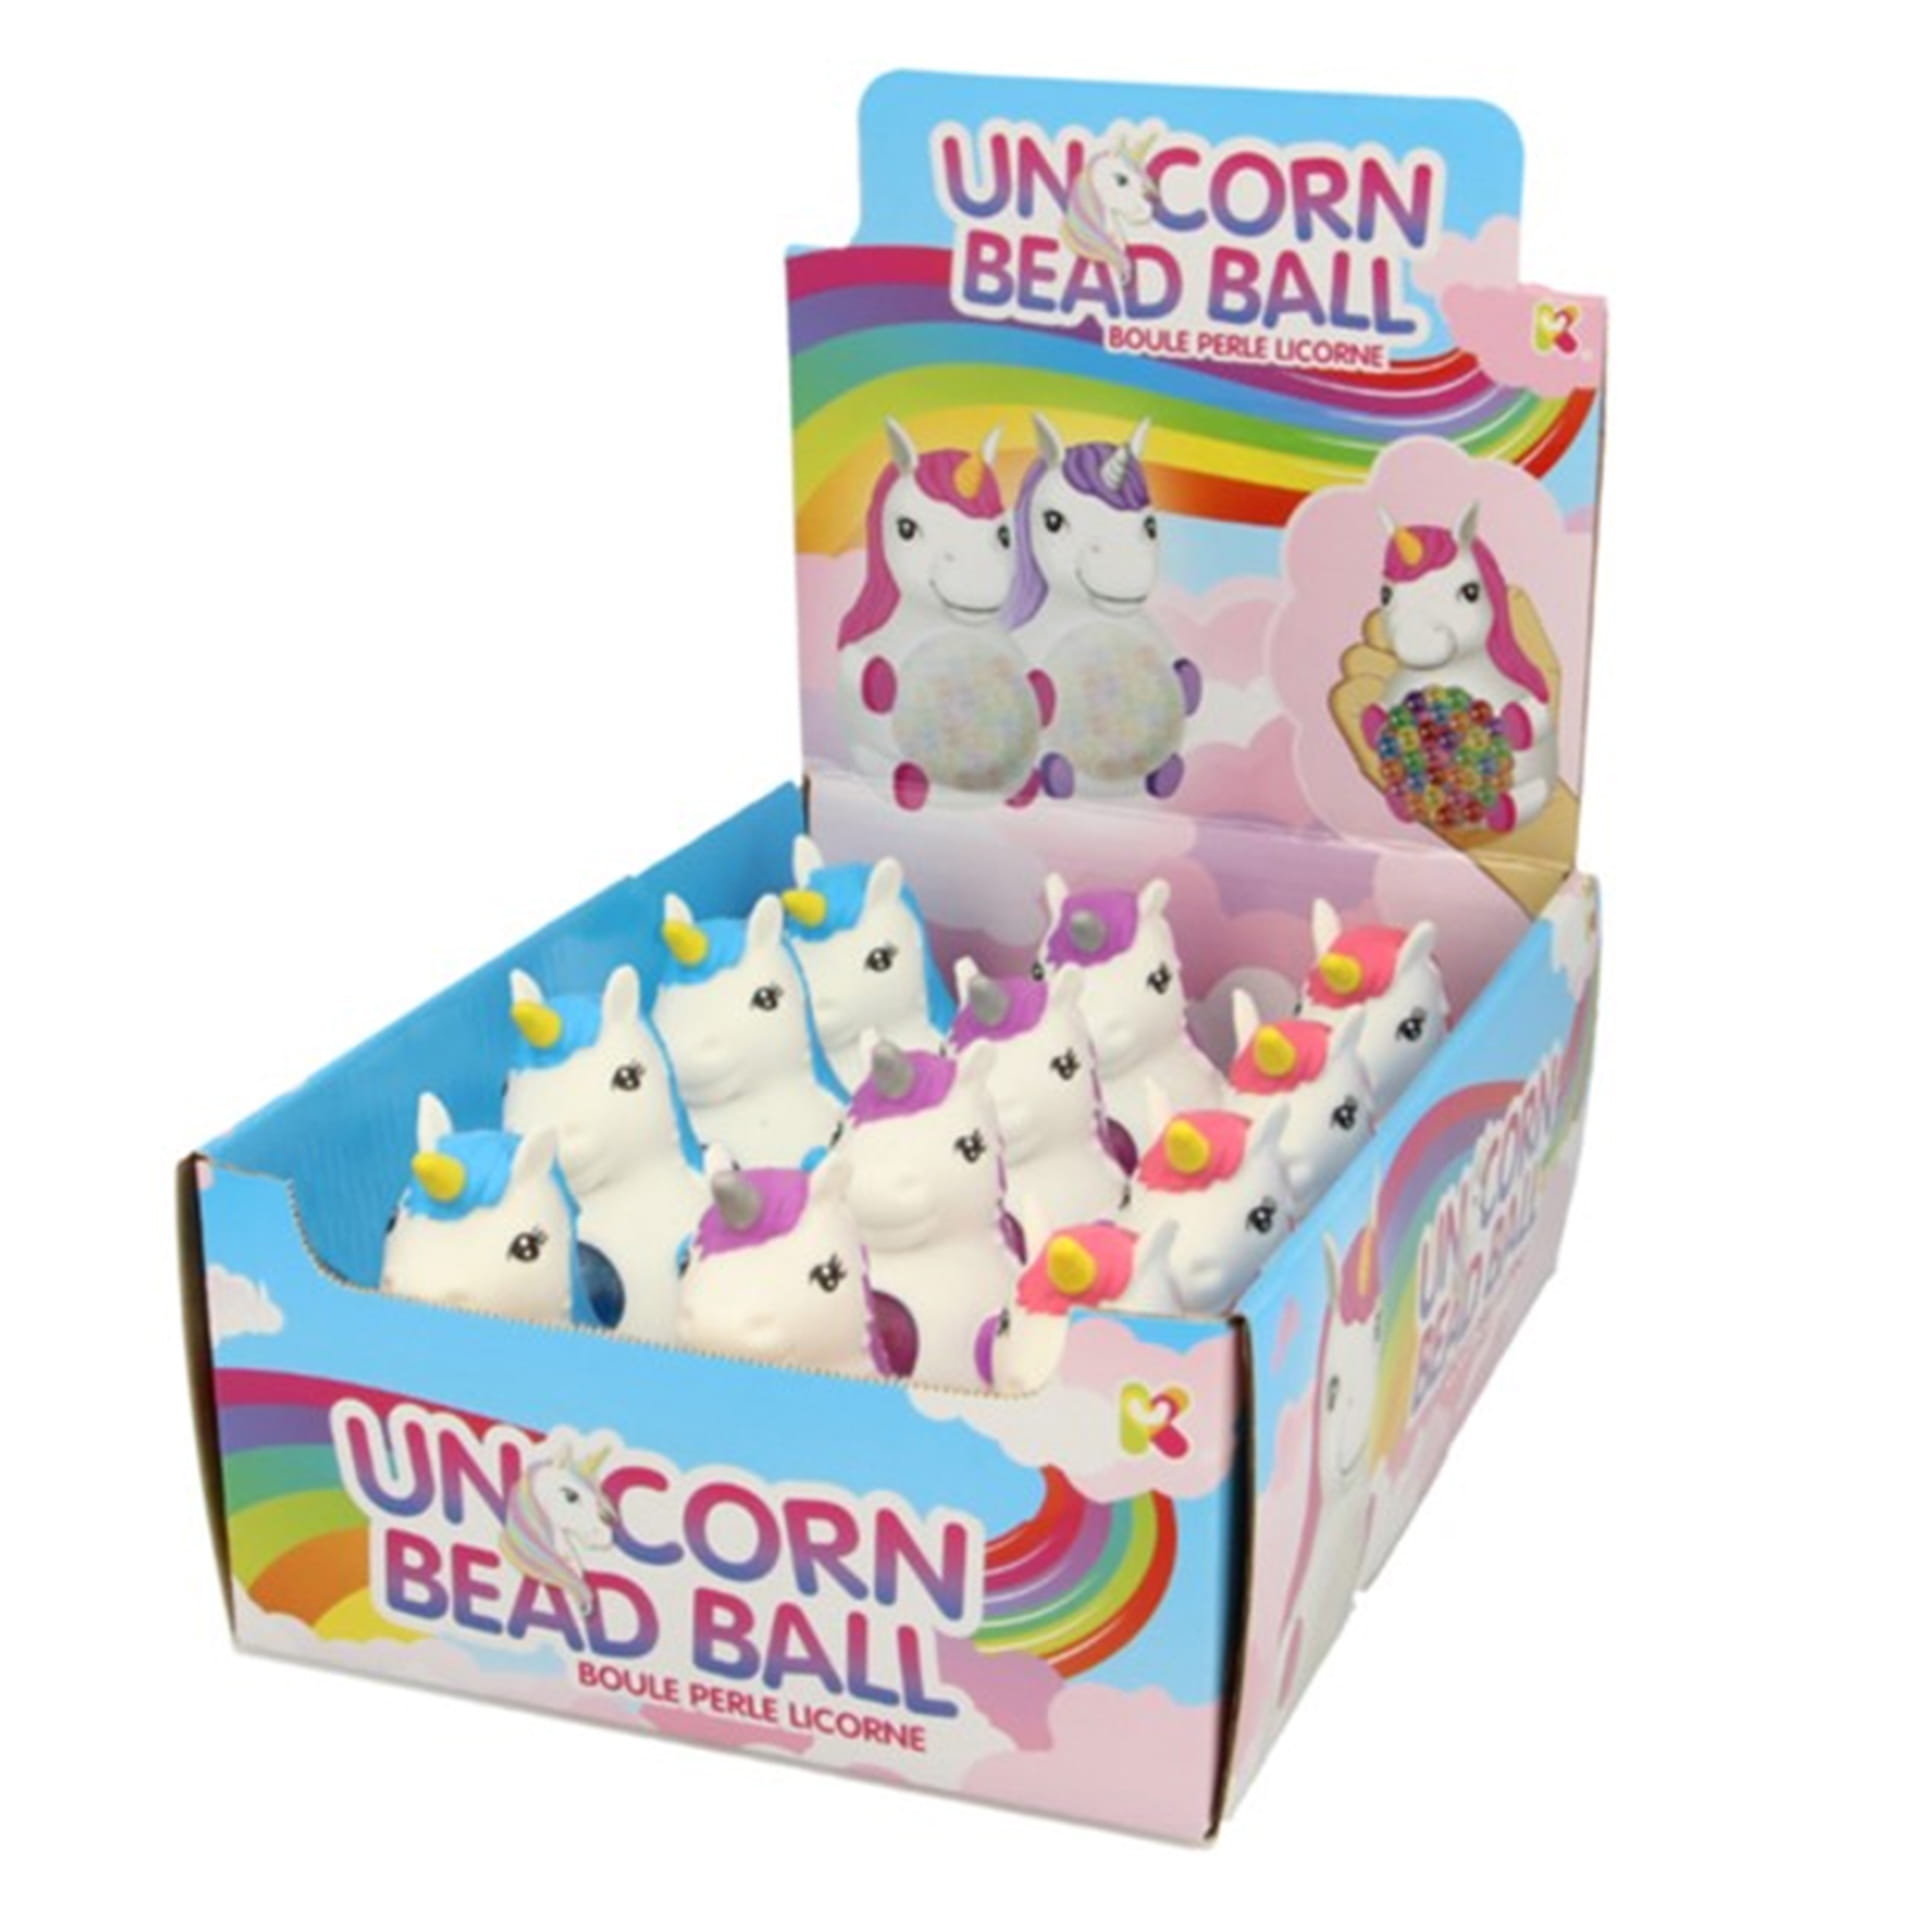 Unicorn Bead Balls